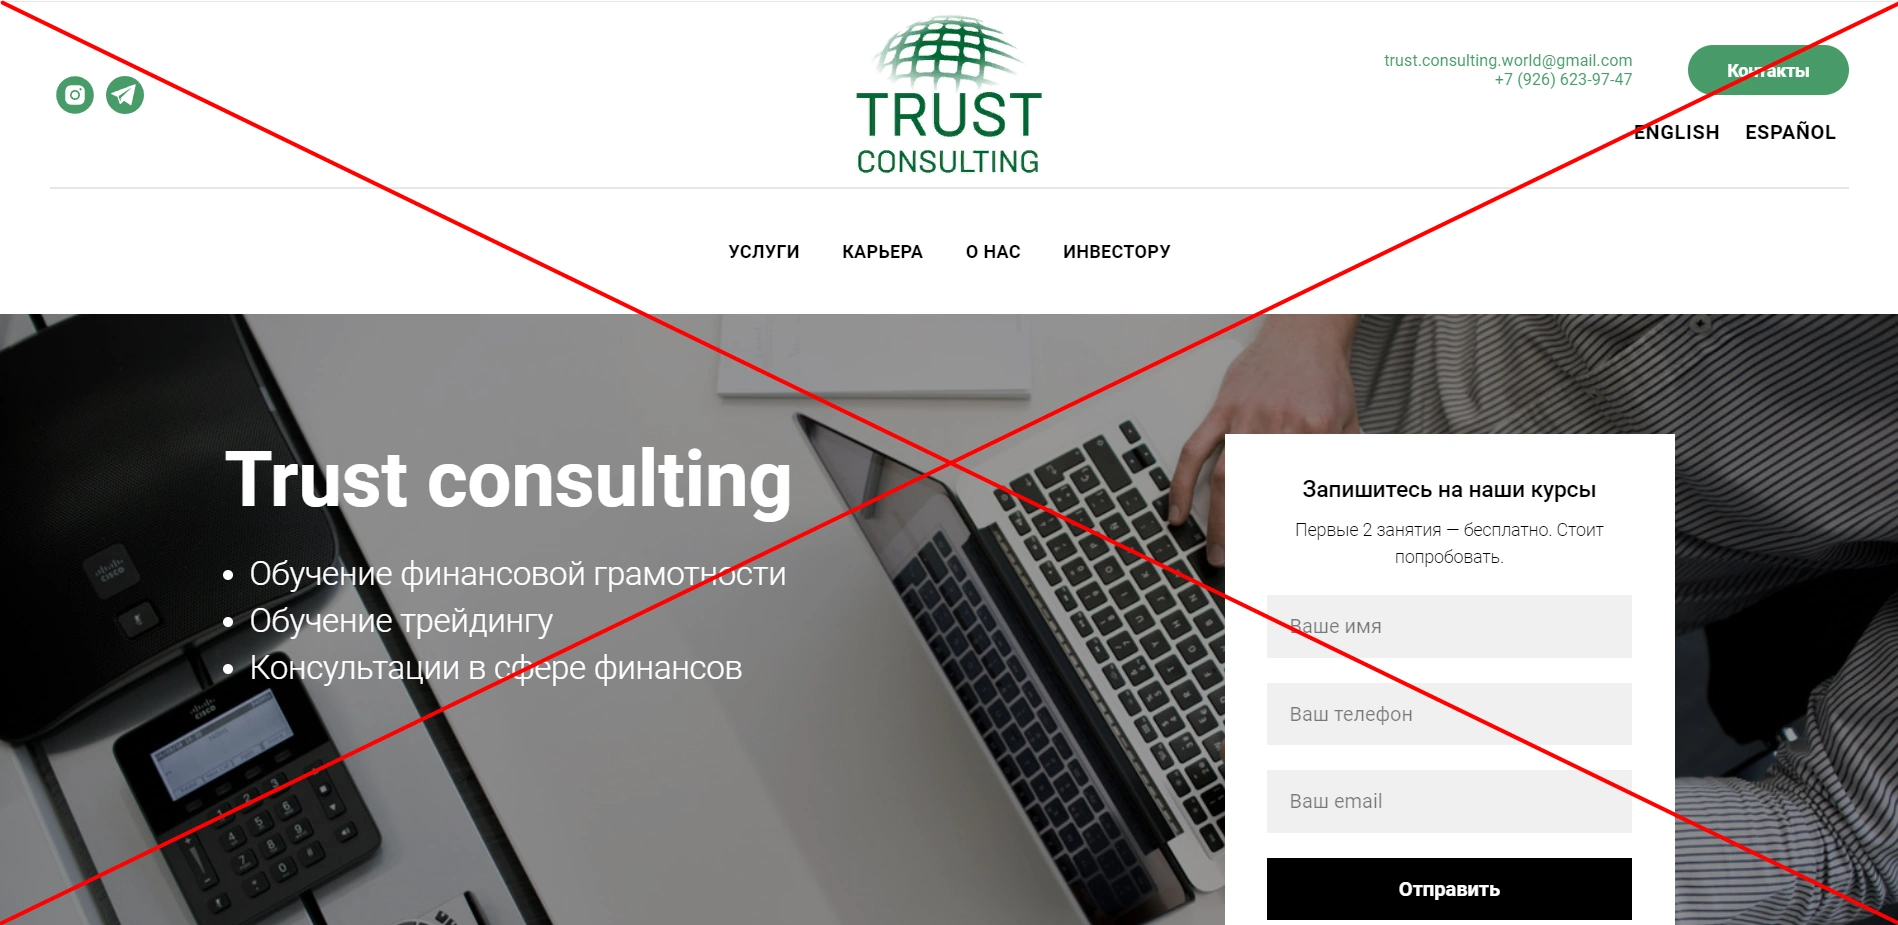 Trust Consulting отзывы. Компания trustconsultingworld.com